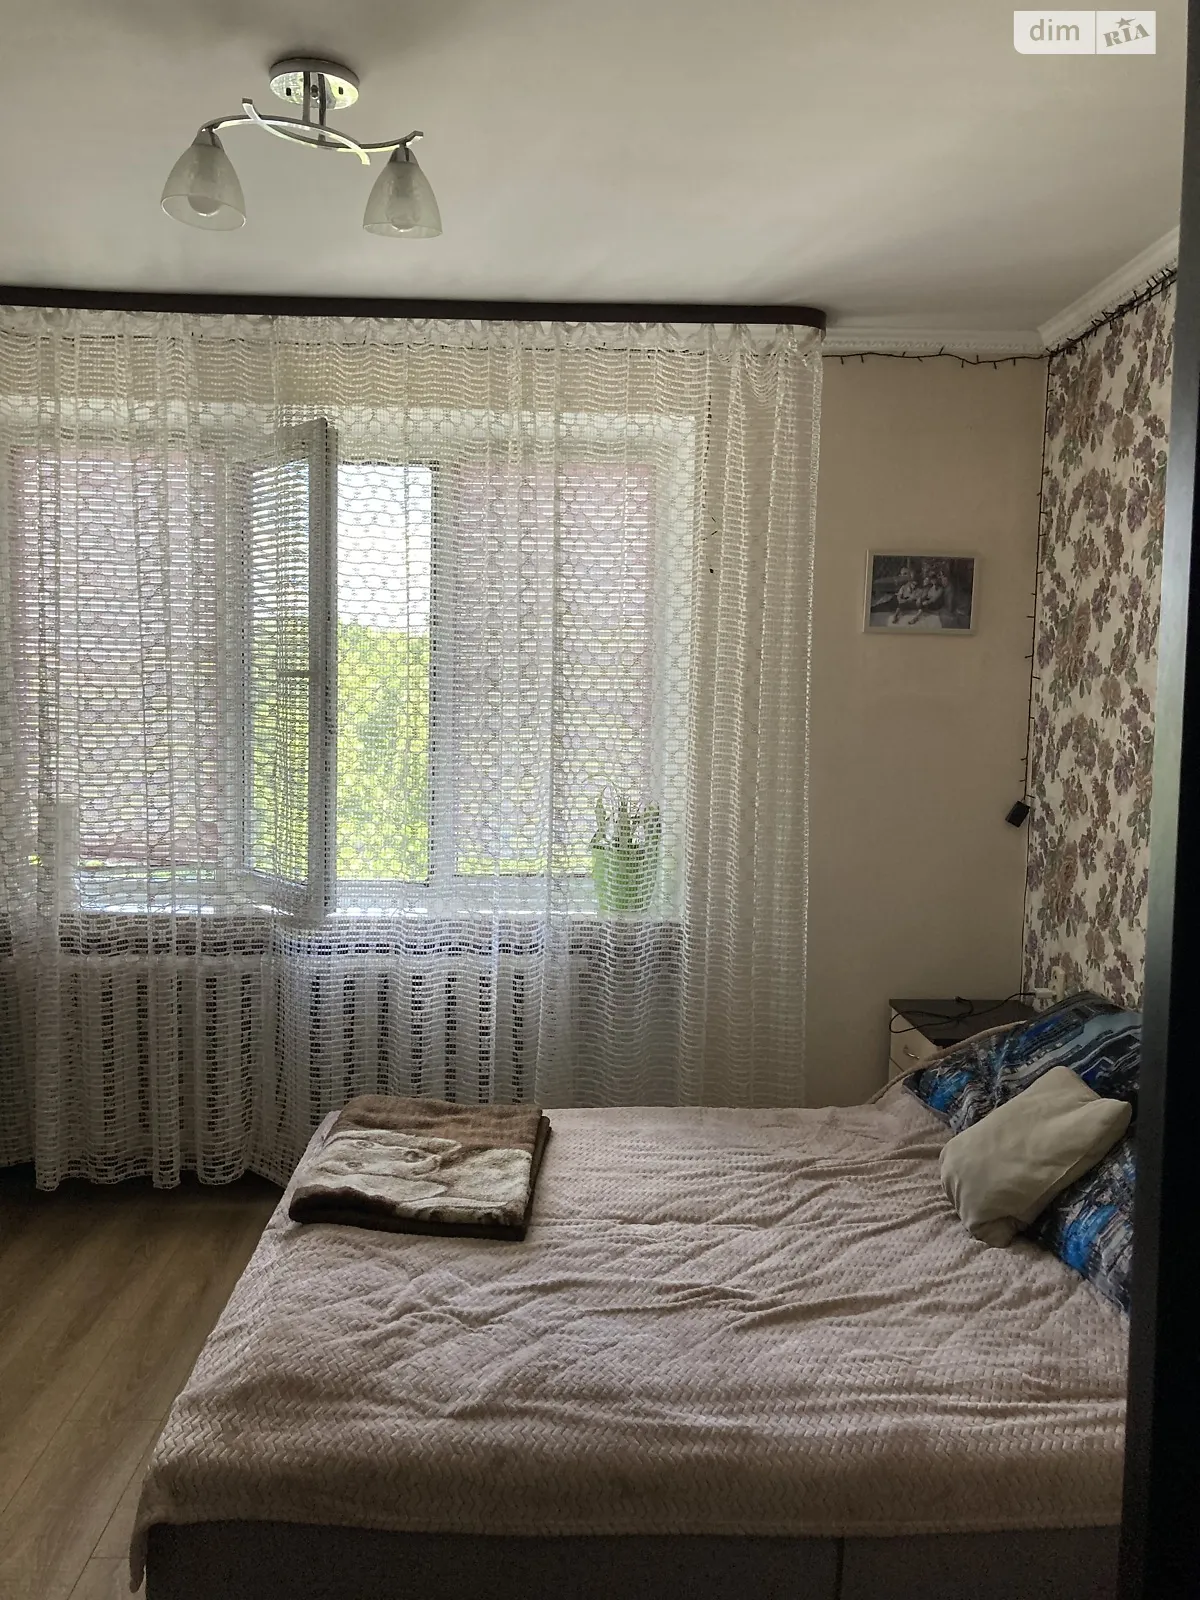 4-кімнатна квартира 62 кв. м у Луцьку, вул. Конякіна